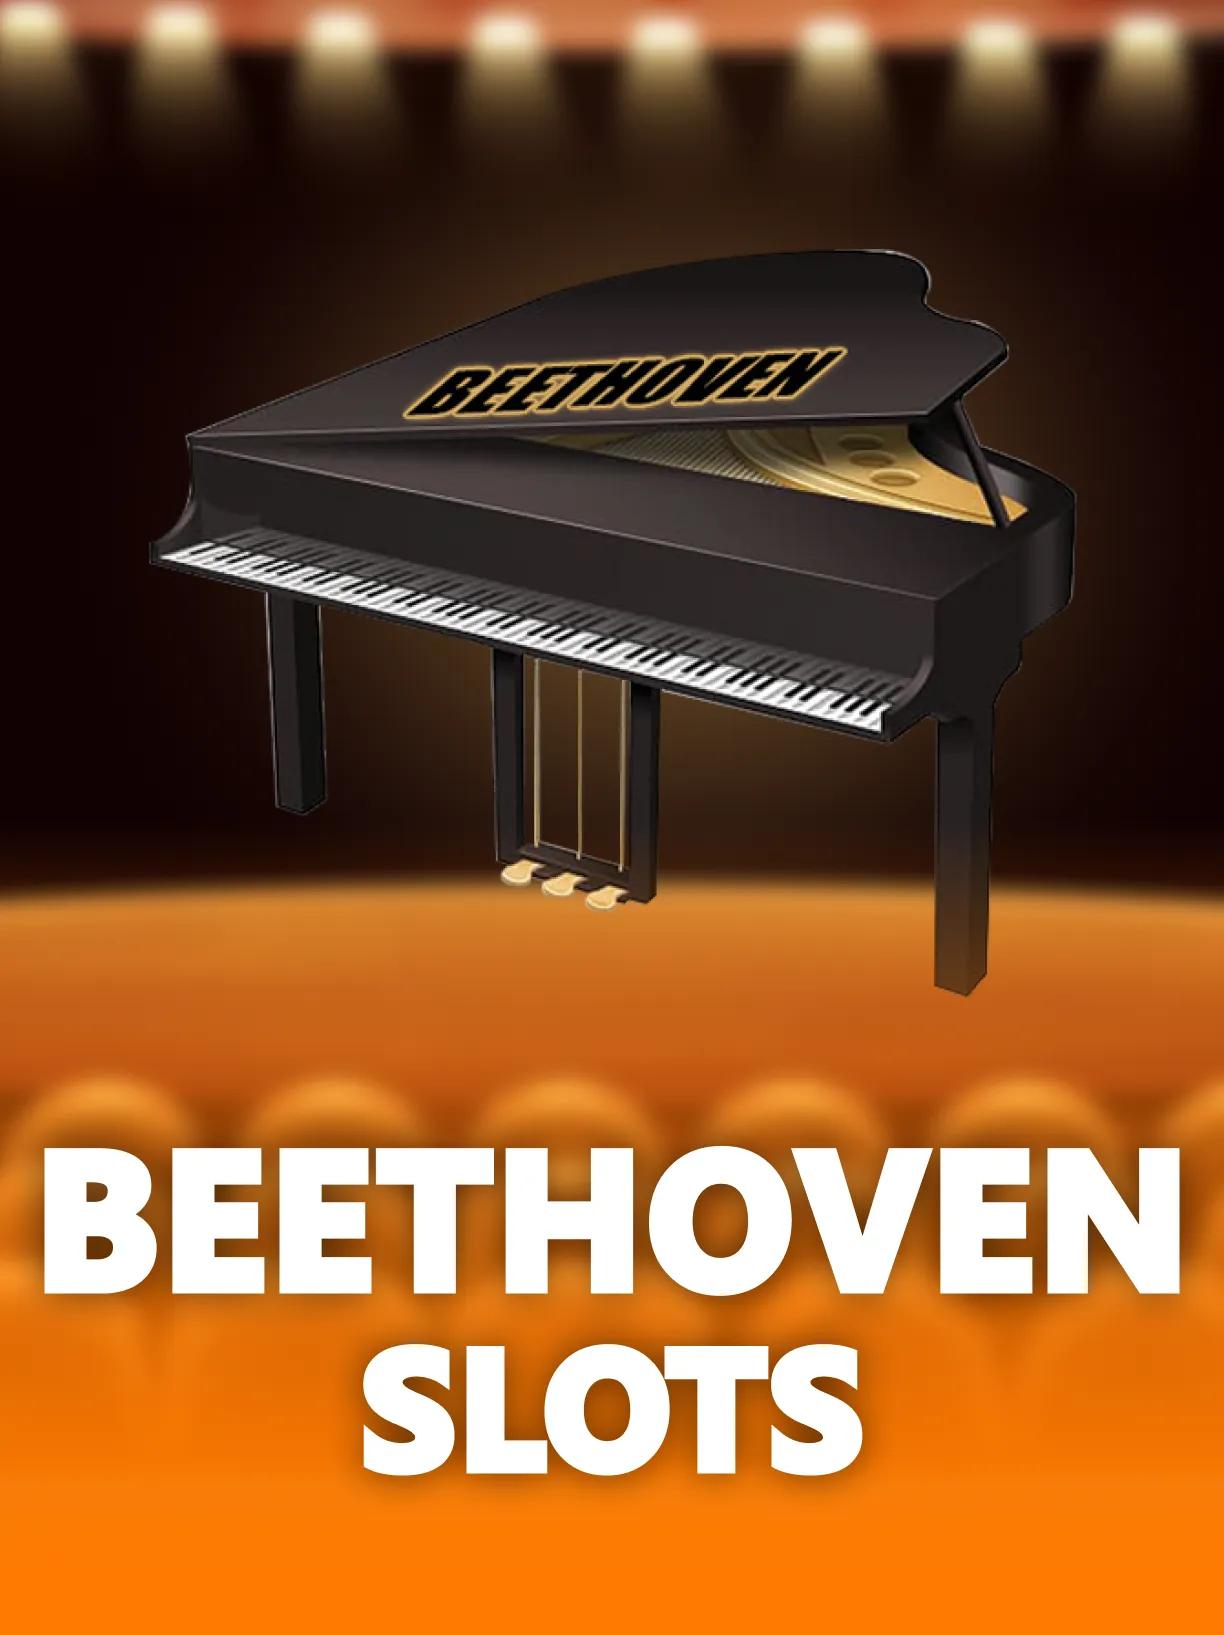 ug_Beethoven_Slots_square.webp